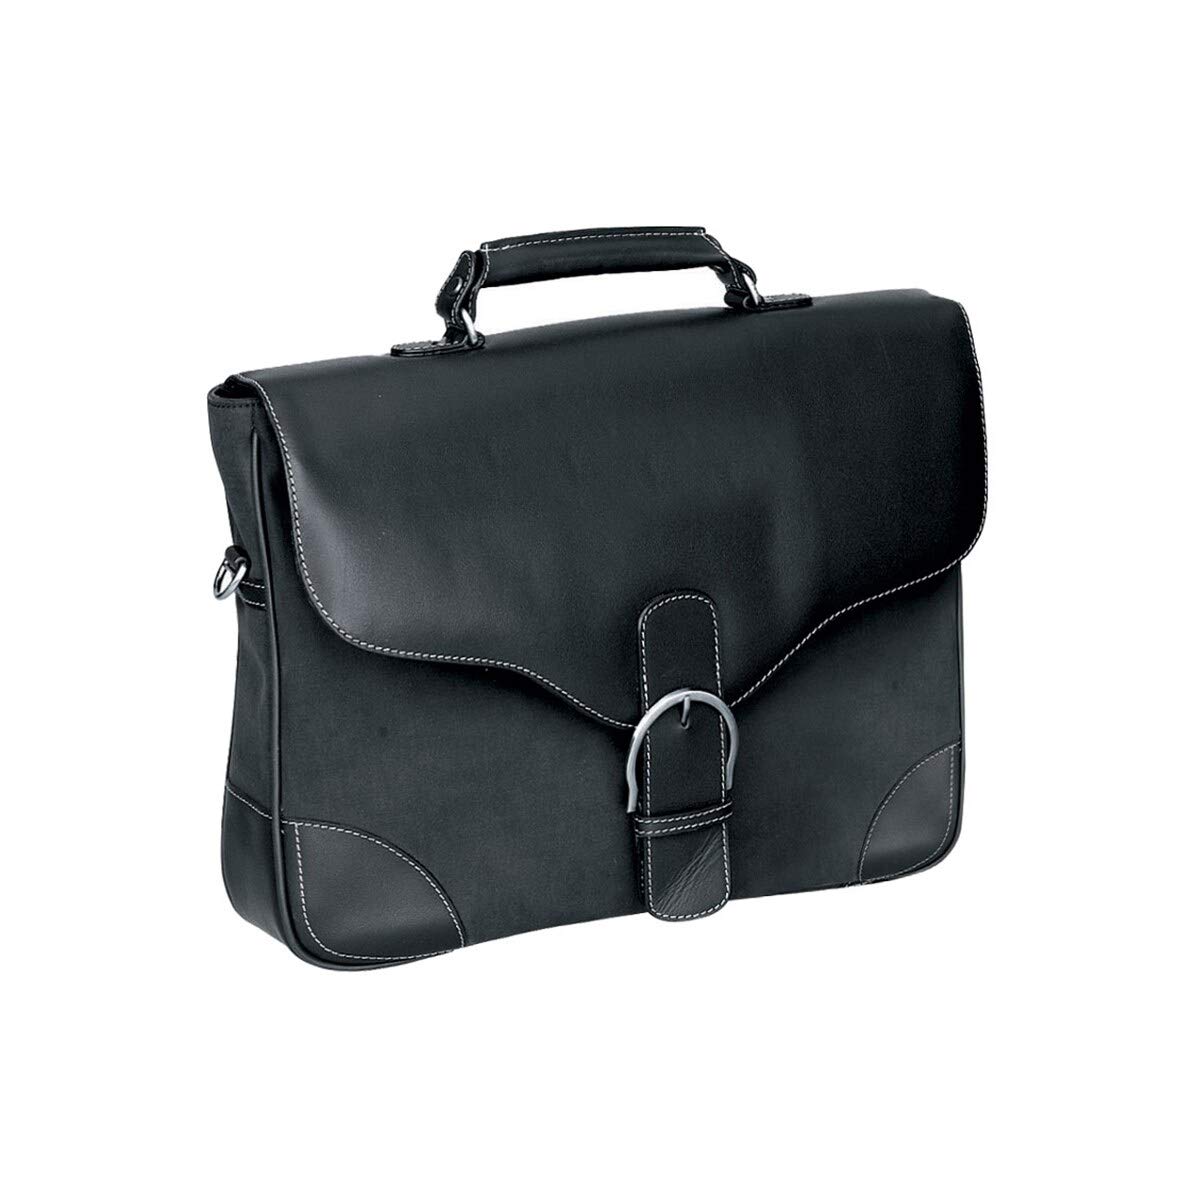 Goodhope Bellino Diplomat Black Leather/Fabric Messenger Bag